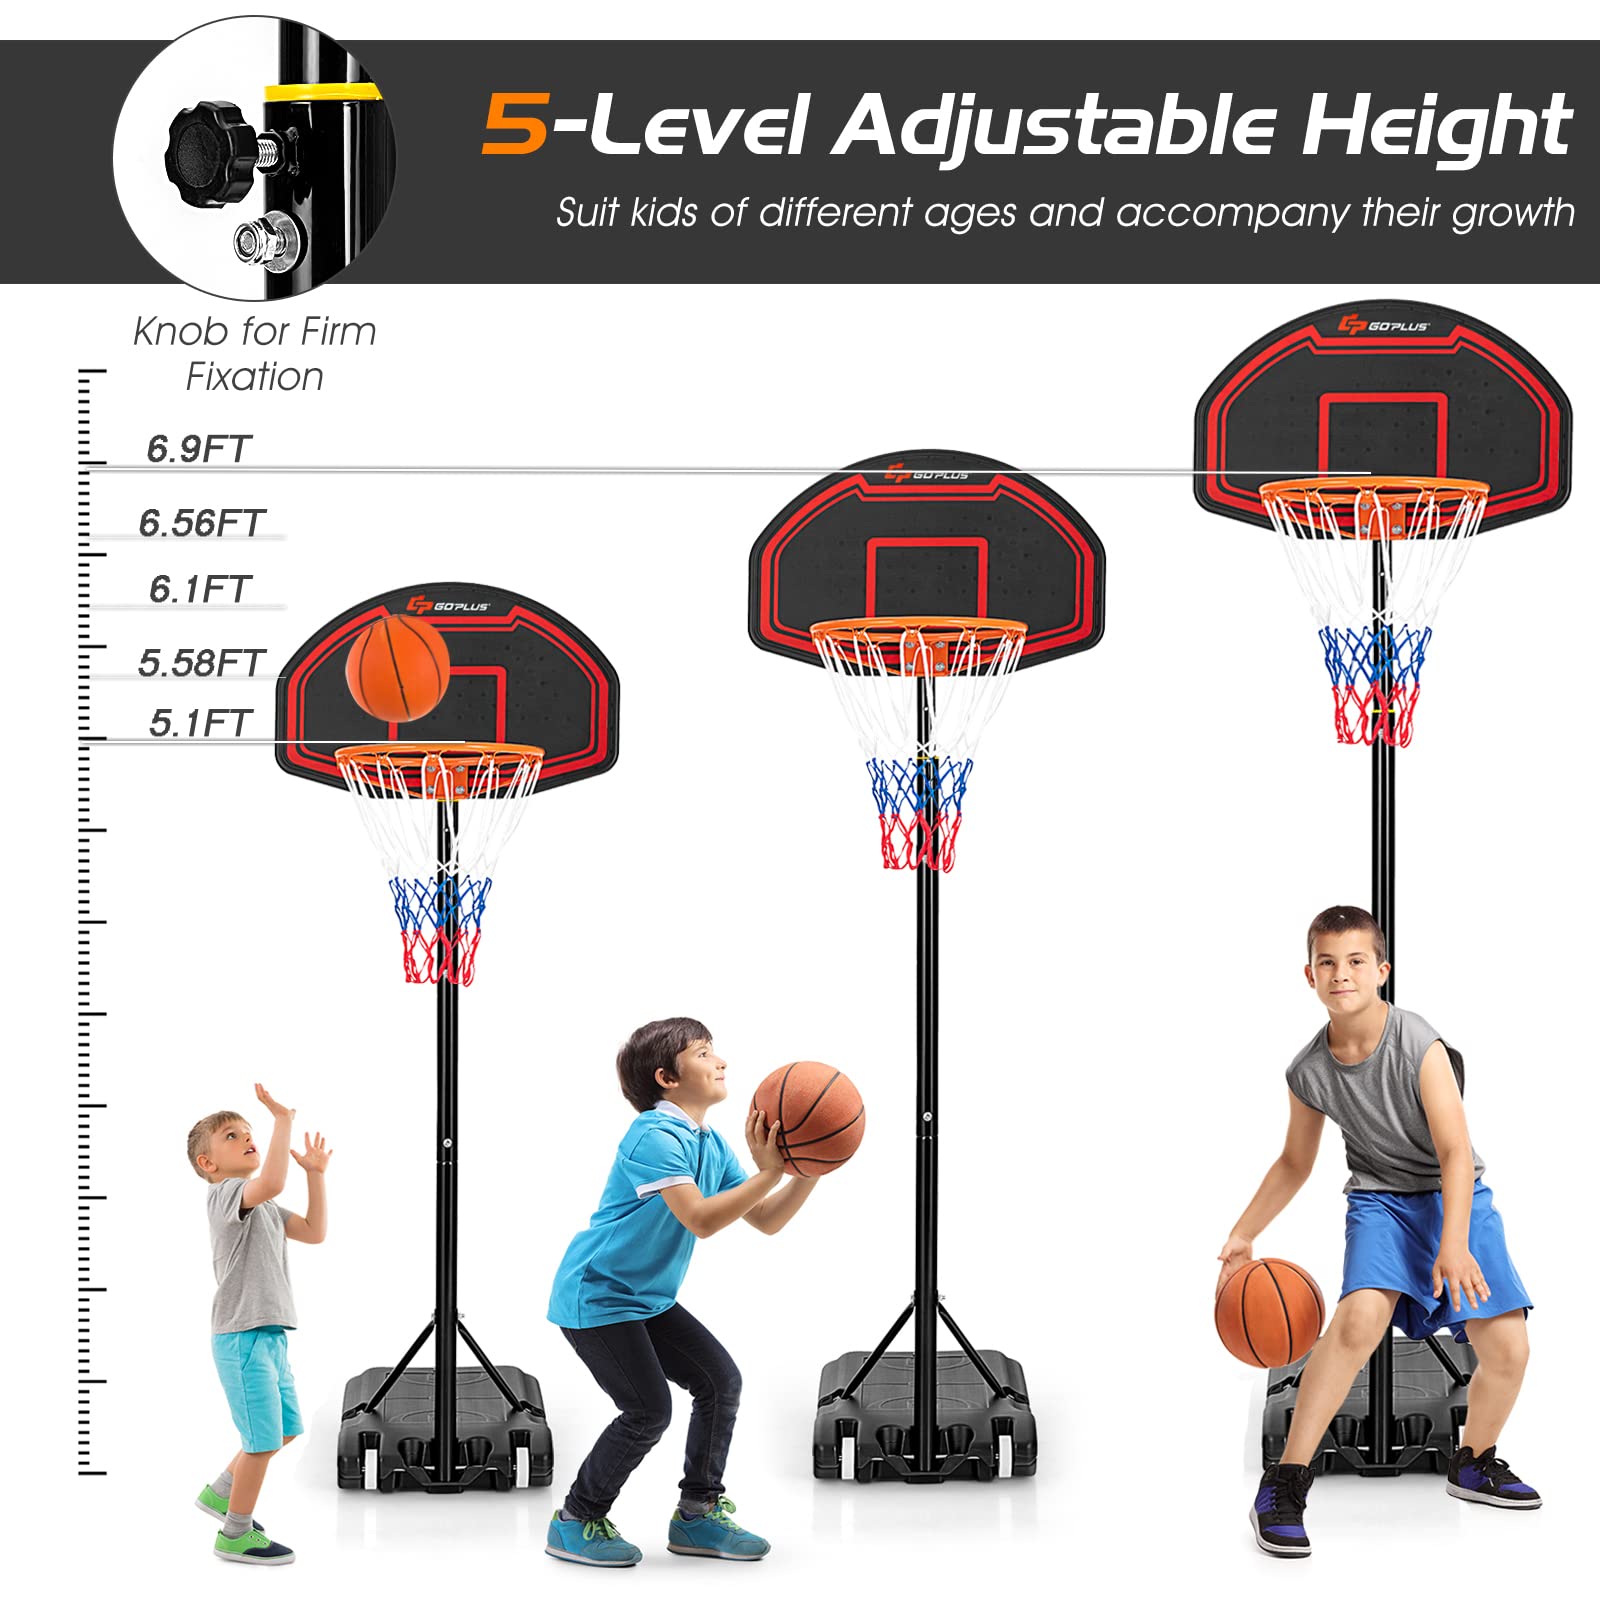 Goplus Portable Basketball Hoop Outdoor, 6.3FT-8.1FT Height Adjustable 5-Level Basketball Stand System with Shatterproof Backboard